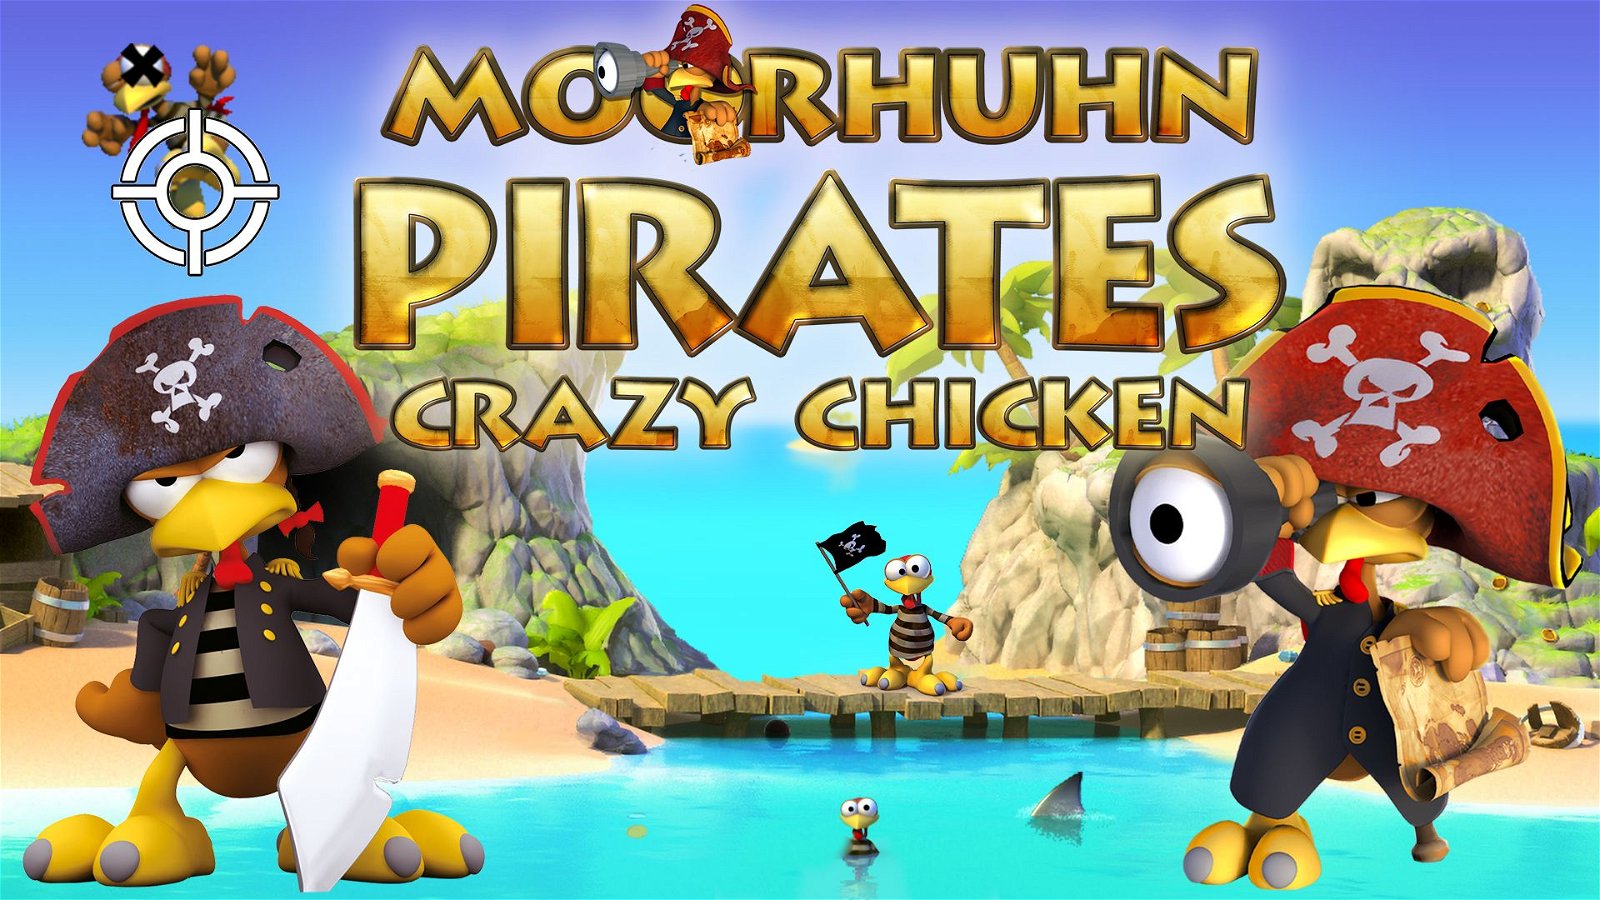 Image of Moorhuhn Pirates - Crazy Chicken Pirates